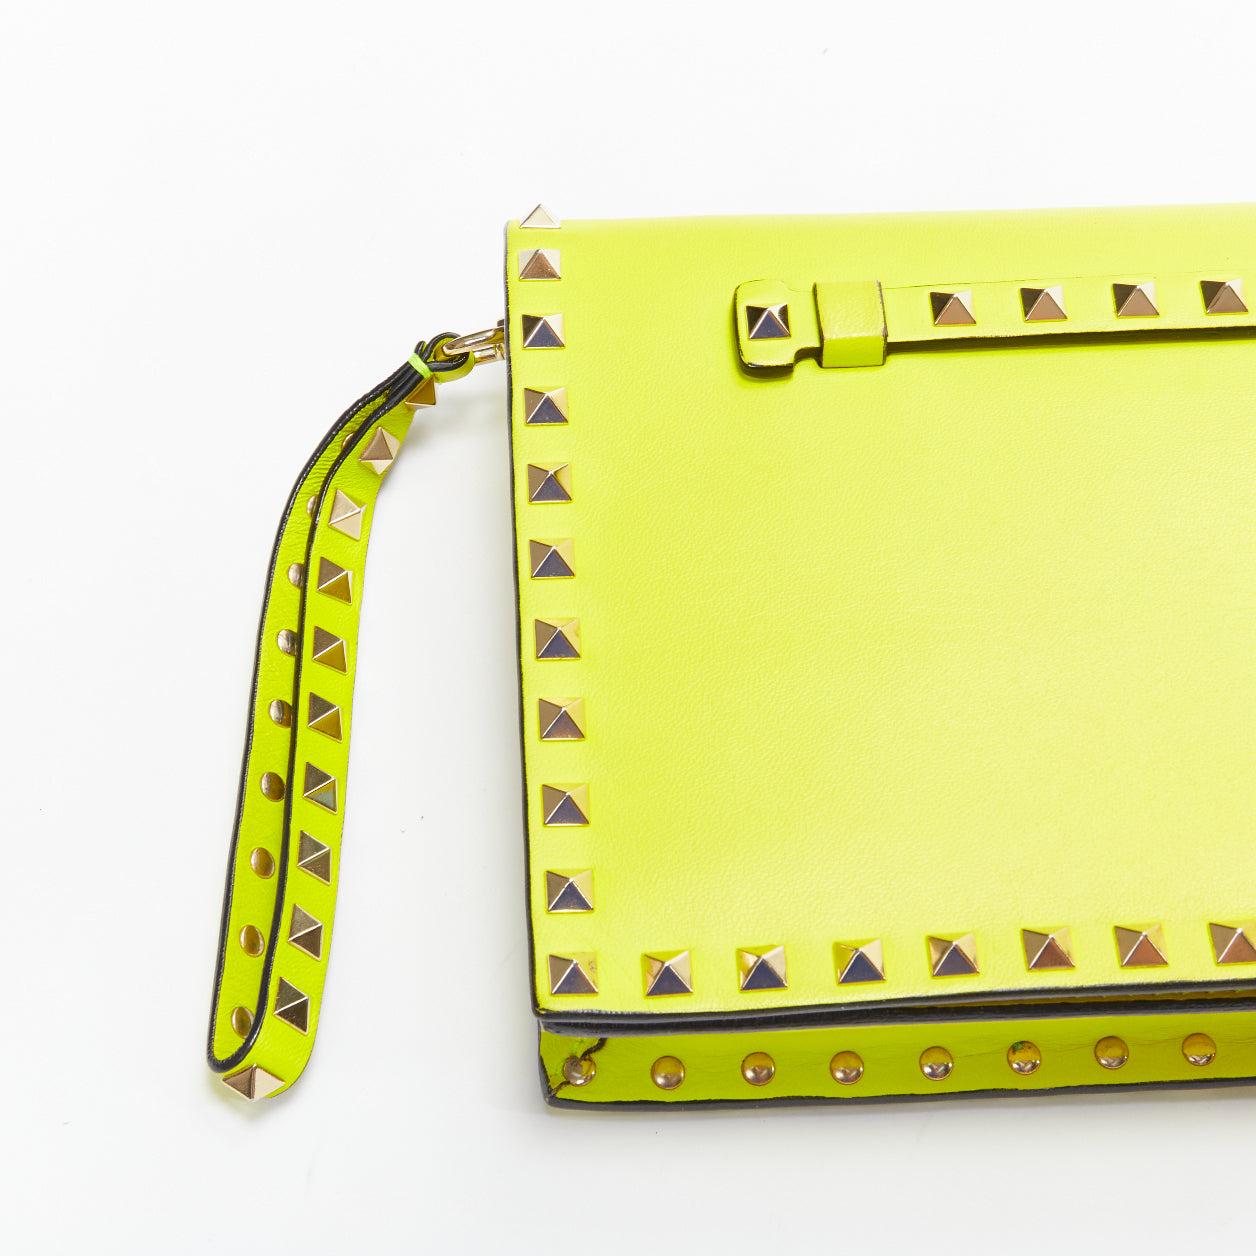 VALENTINO Rockstud neon yellow studded leather flap wristlet clutch bag 4